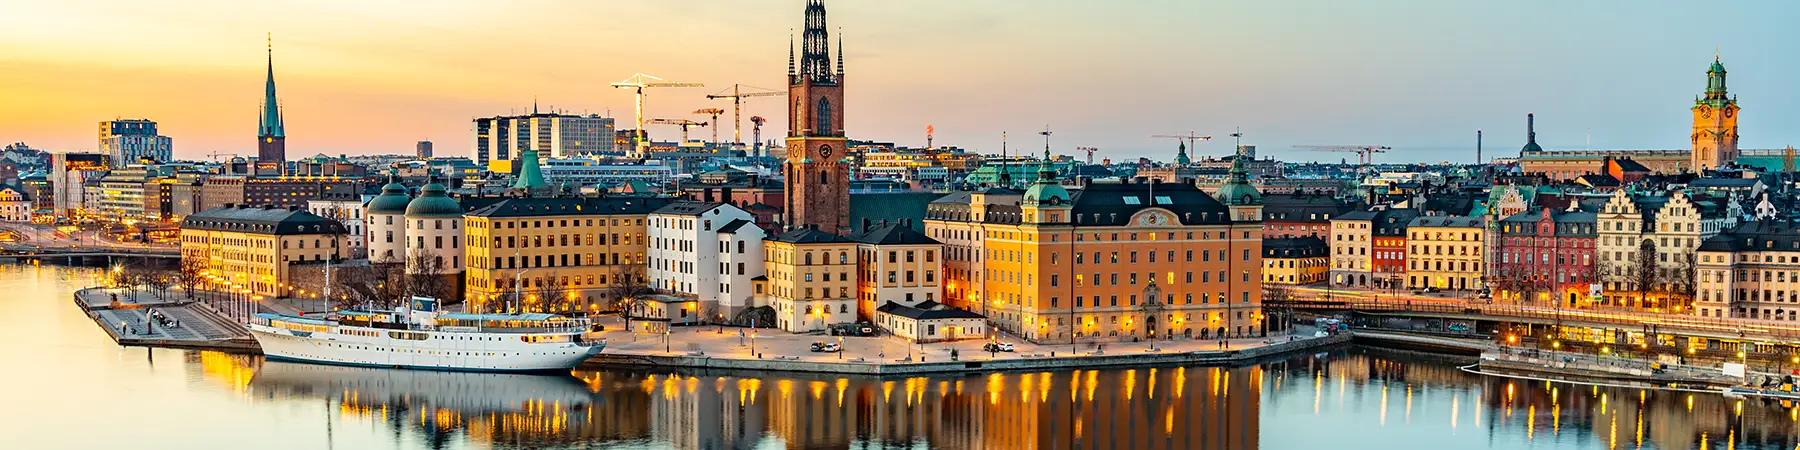 panoramic image of Swedish city on river